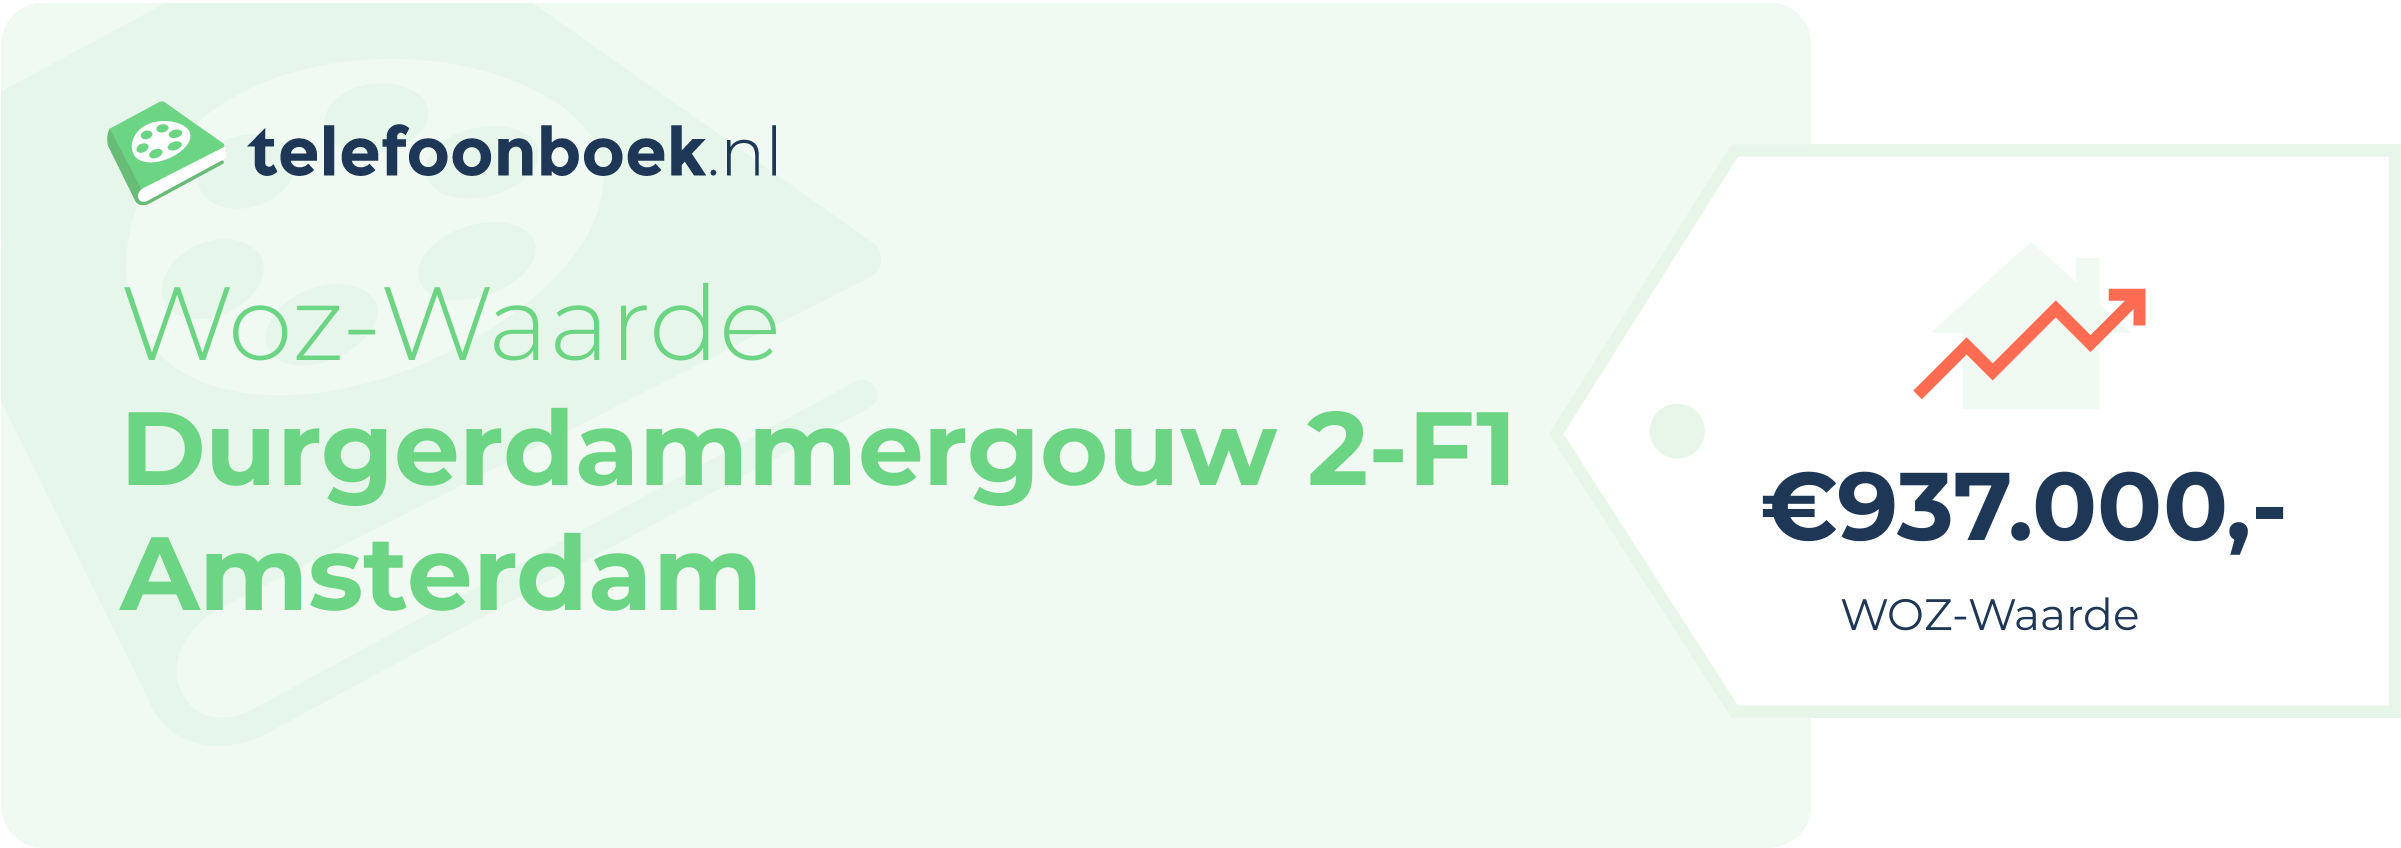 WOZ-waarde Durgerdammergouw 2-F1 Amsterdam